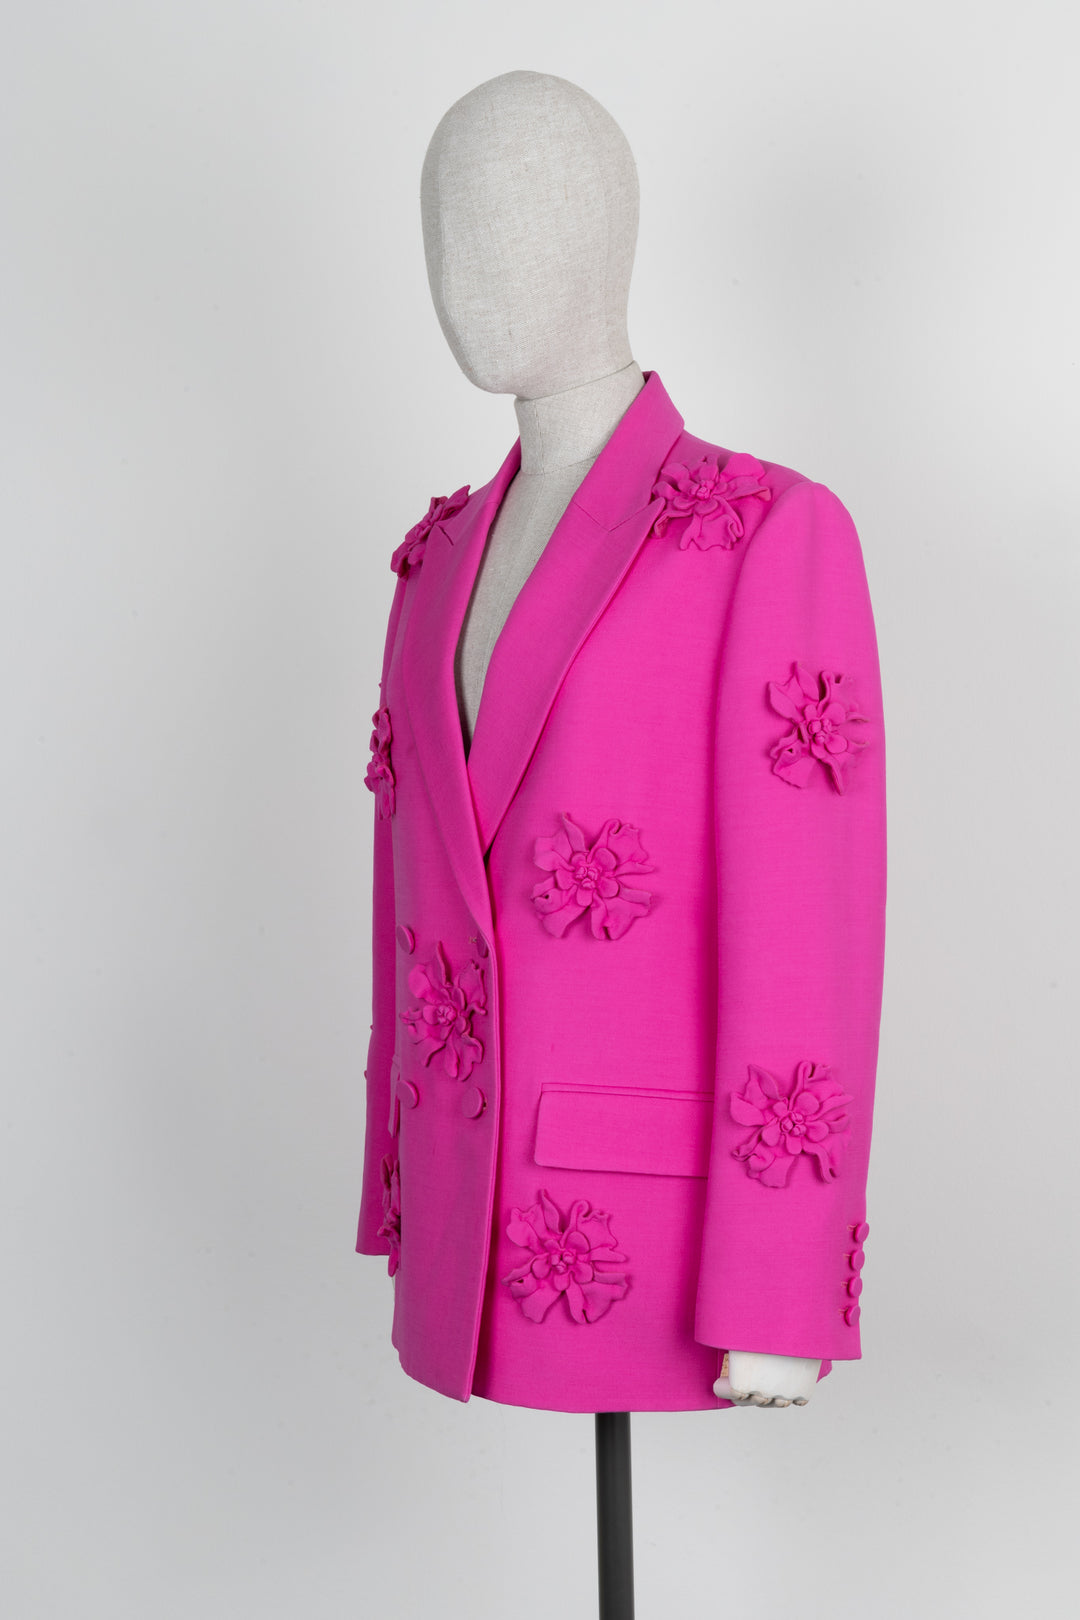 VALENTINO Crepe Couture Flower Embellished Blazer Pink